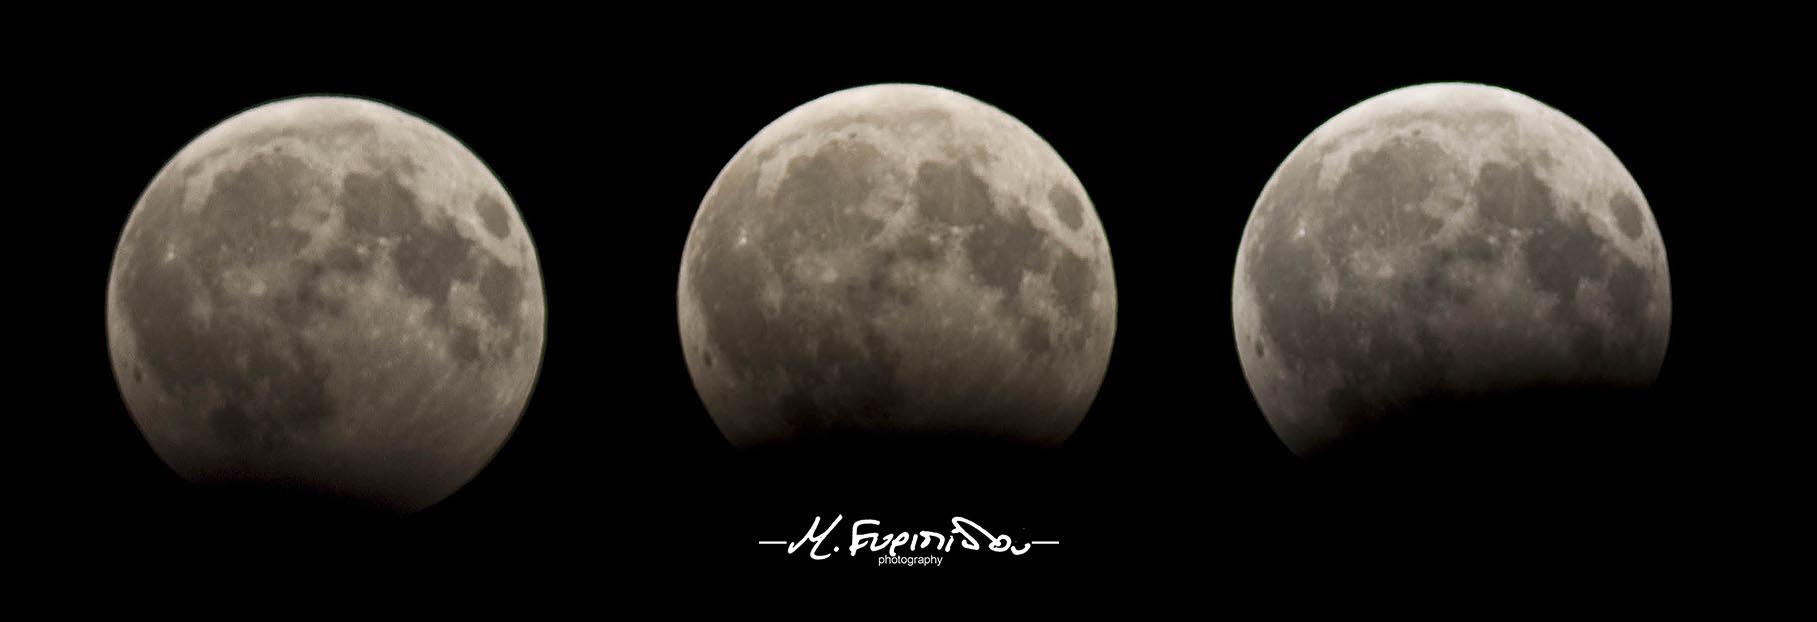 Cyprus 2017 partial lunar eclipse